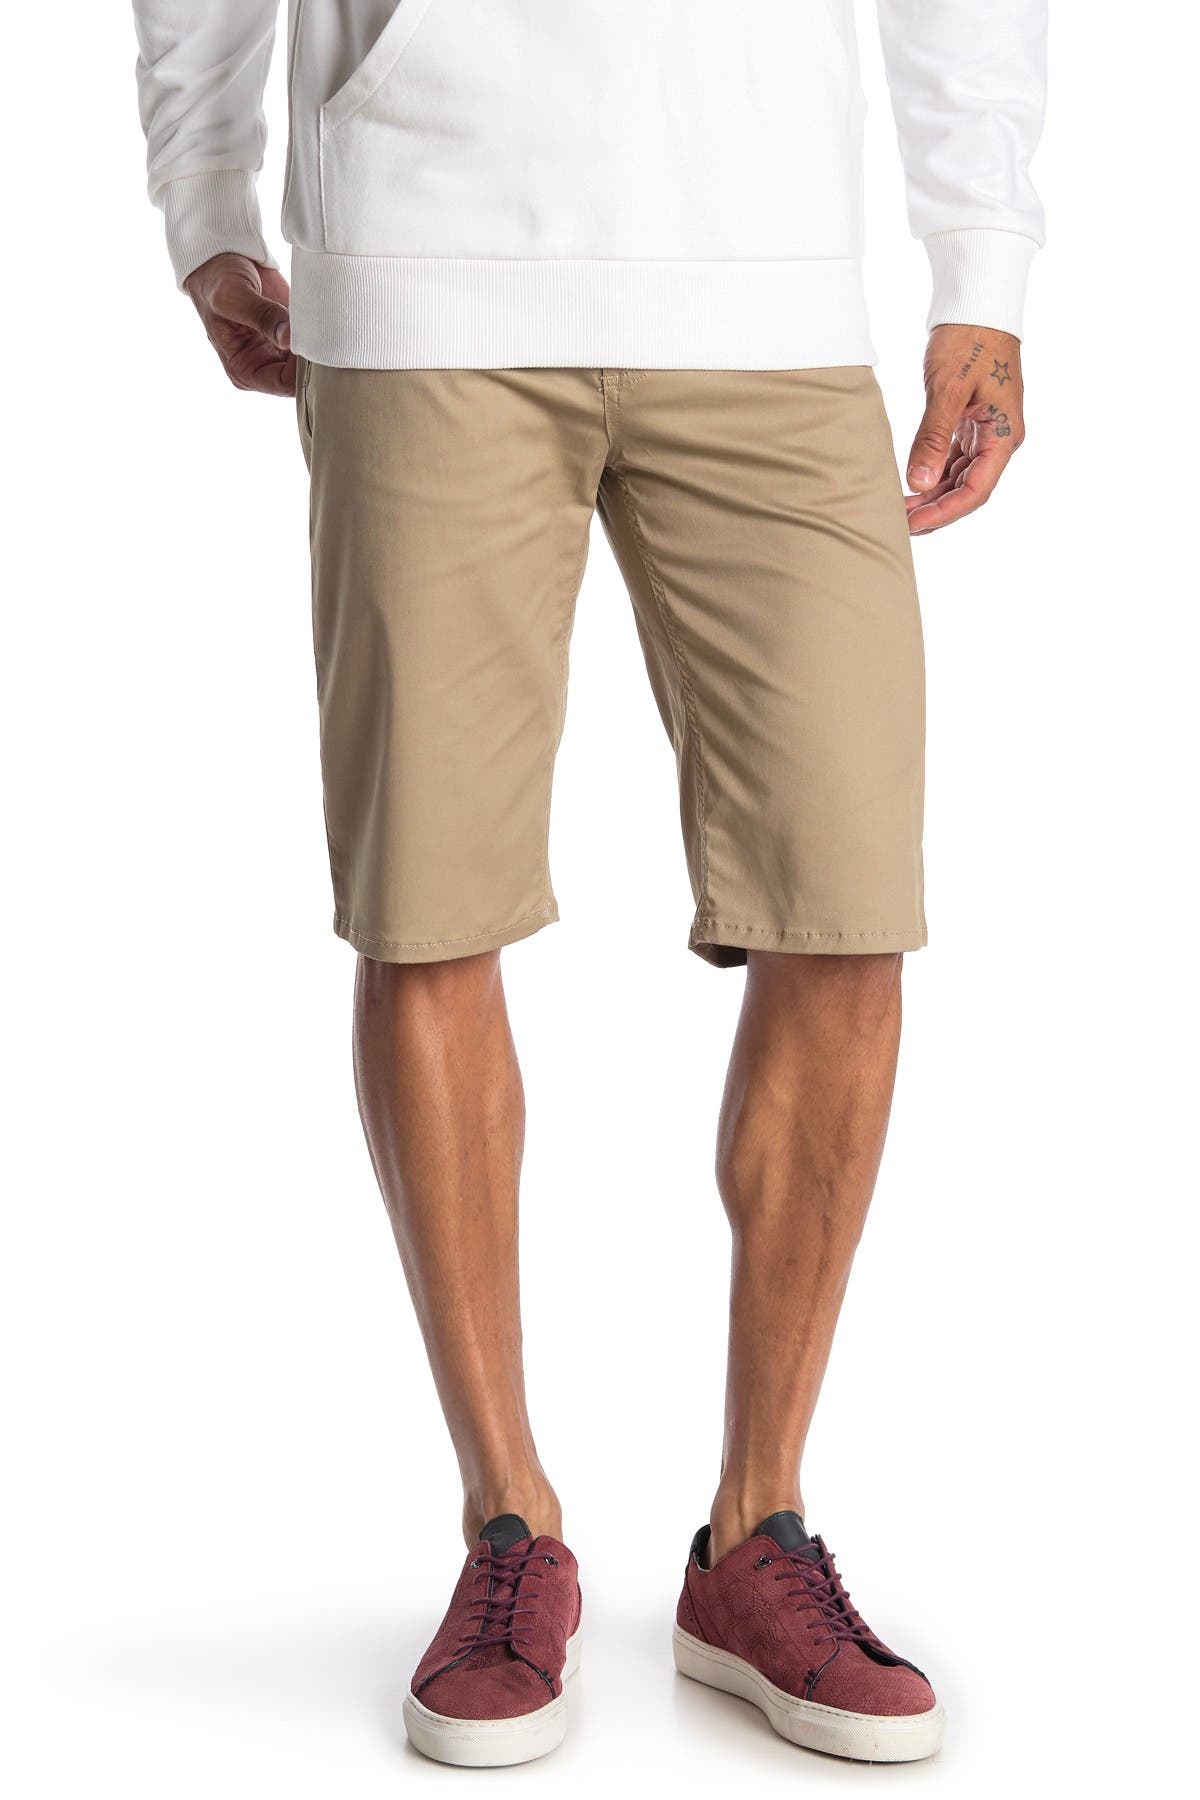 5 pocket golf shorts